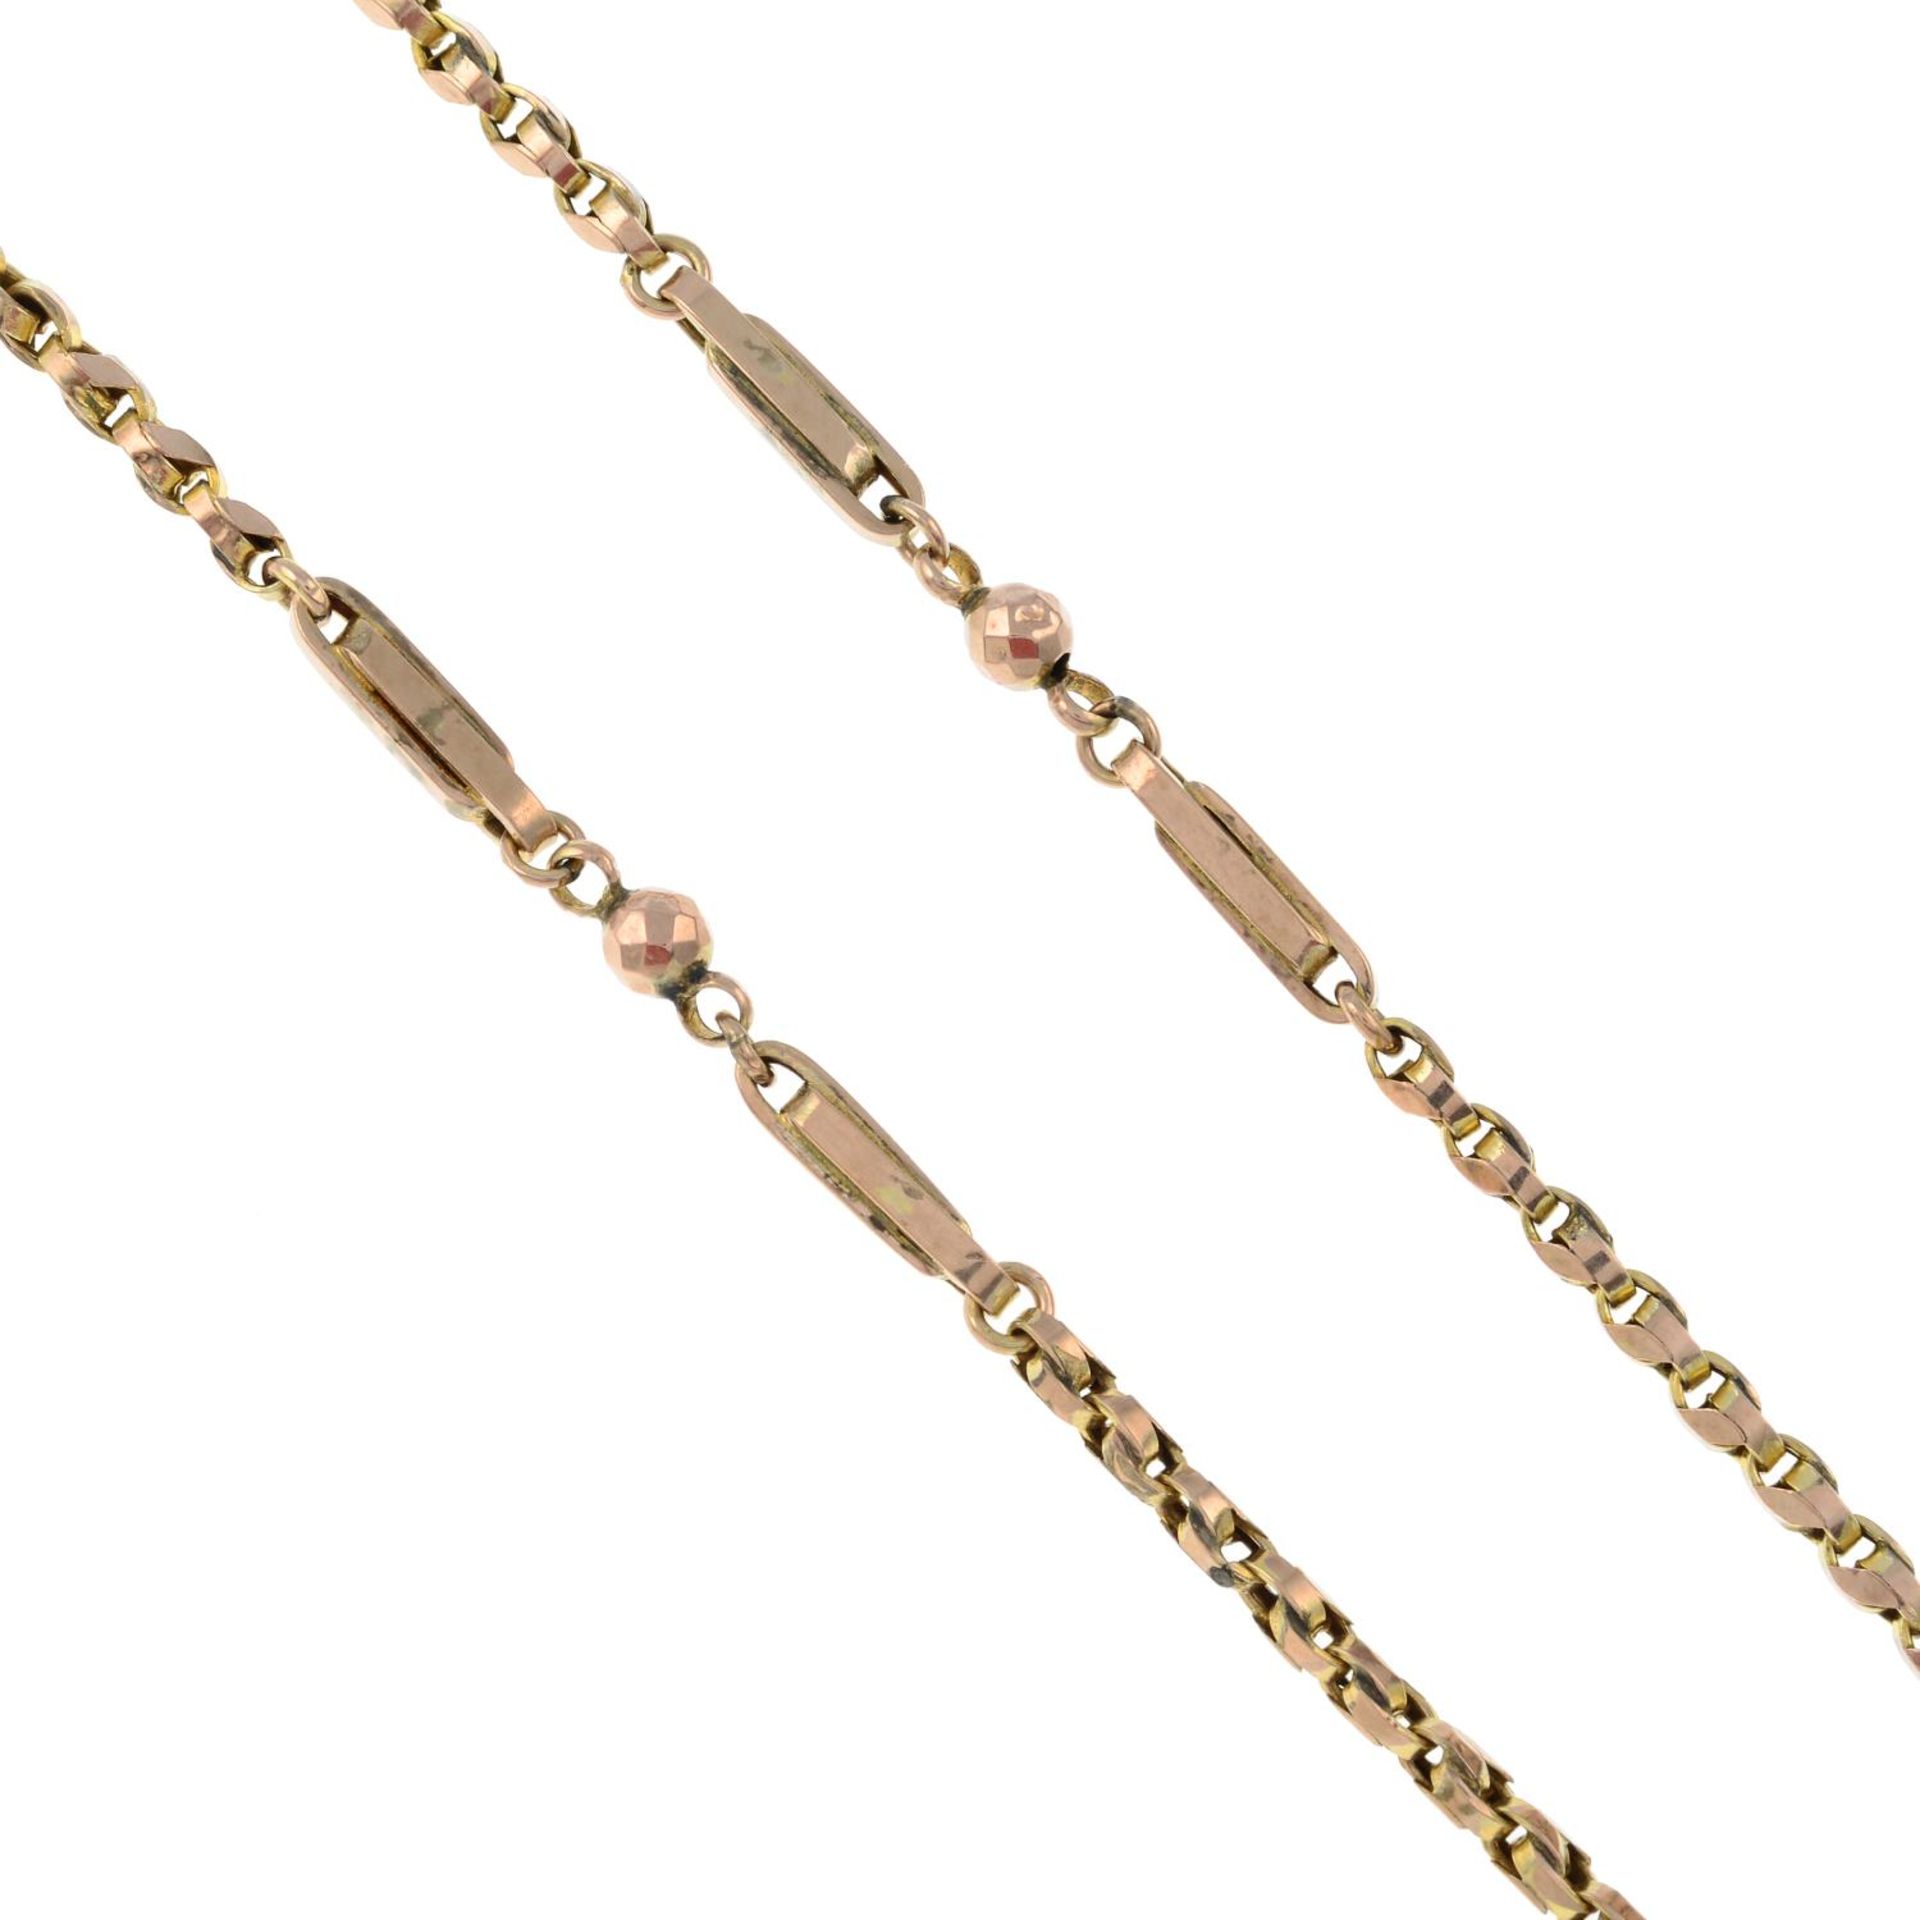 A fancy-link chain.Length 46.5cms.